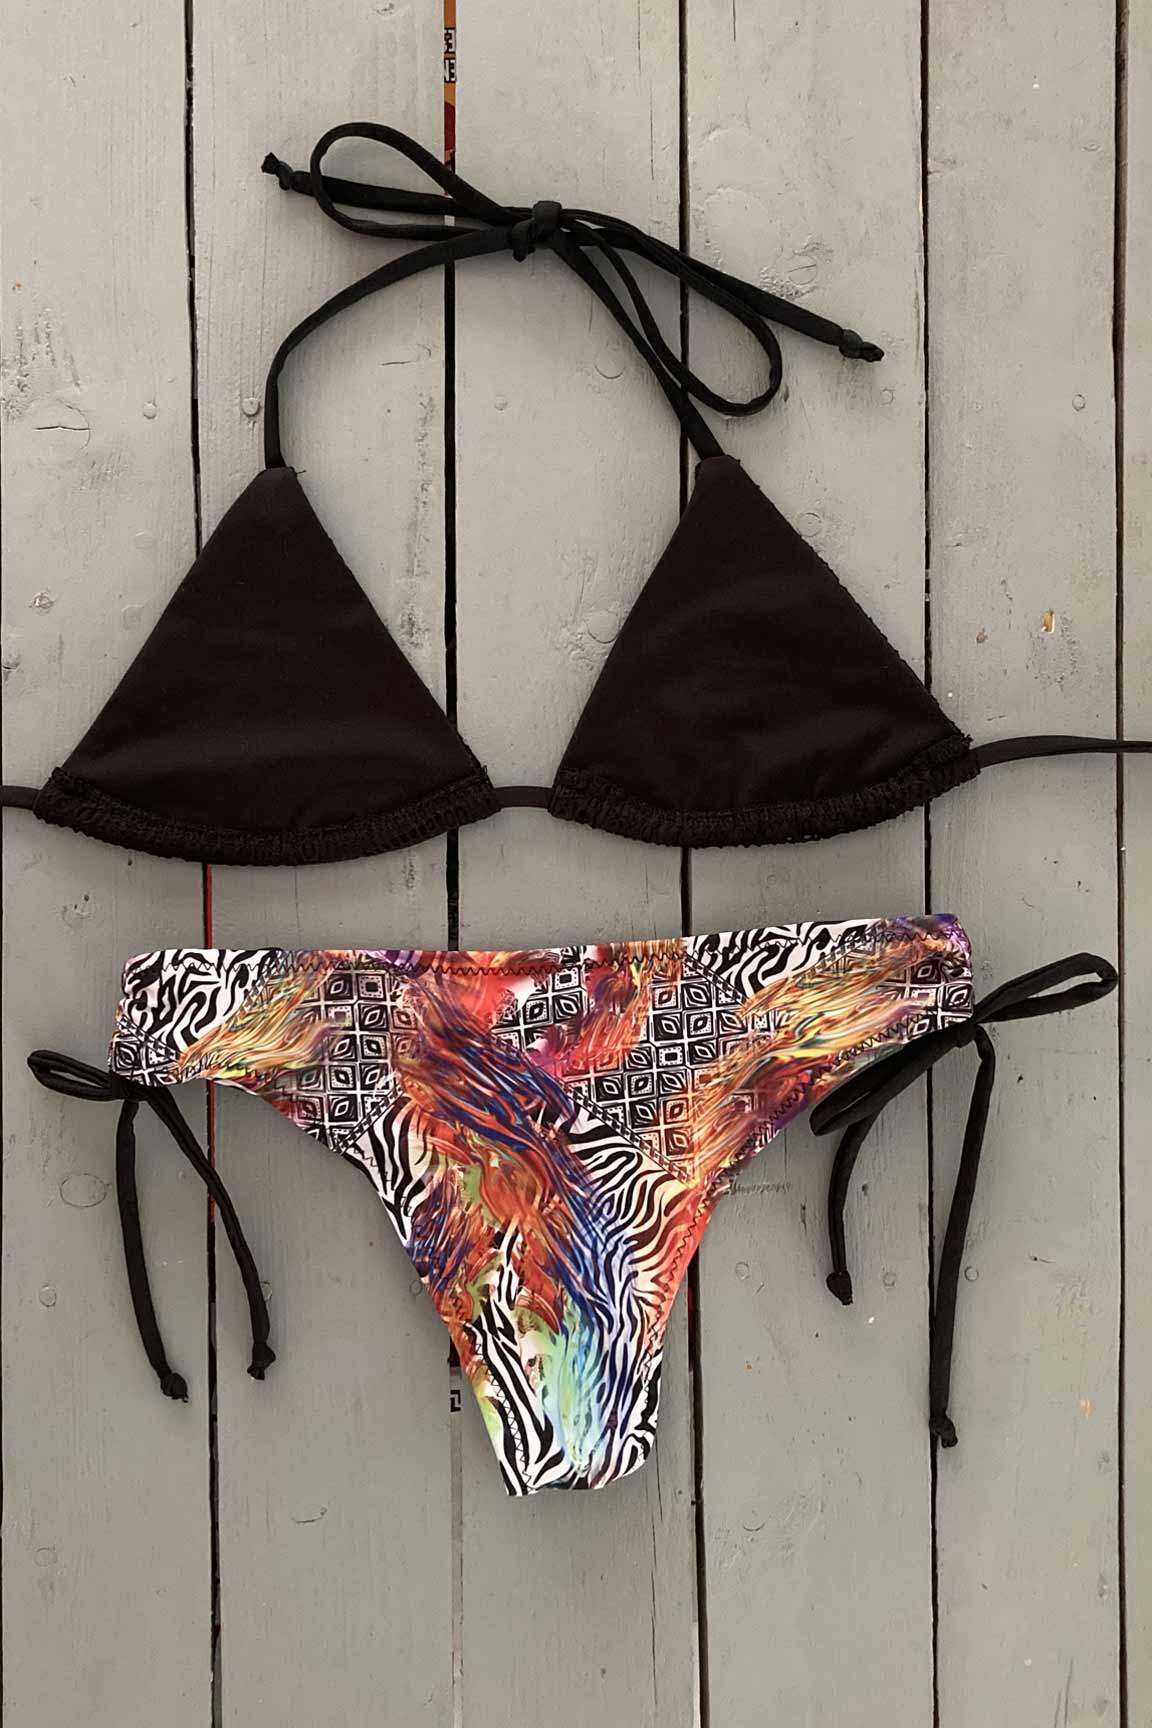 Black digital print define this triangle bikini top. Dare to be bold and wear with florals or zebra print bikini bottoms.